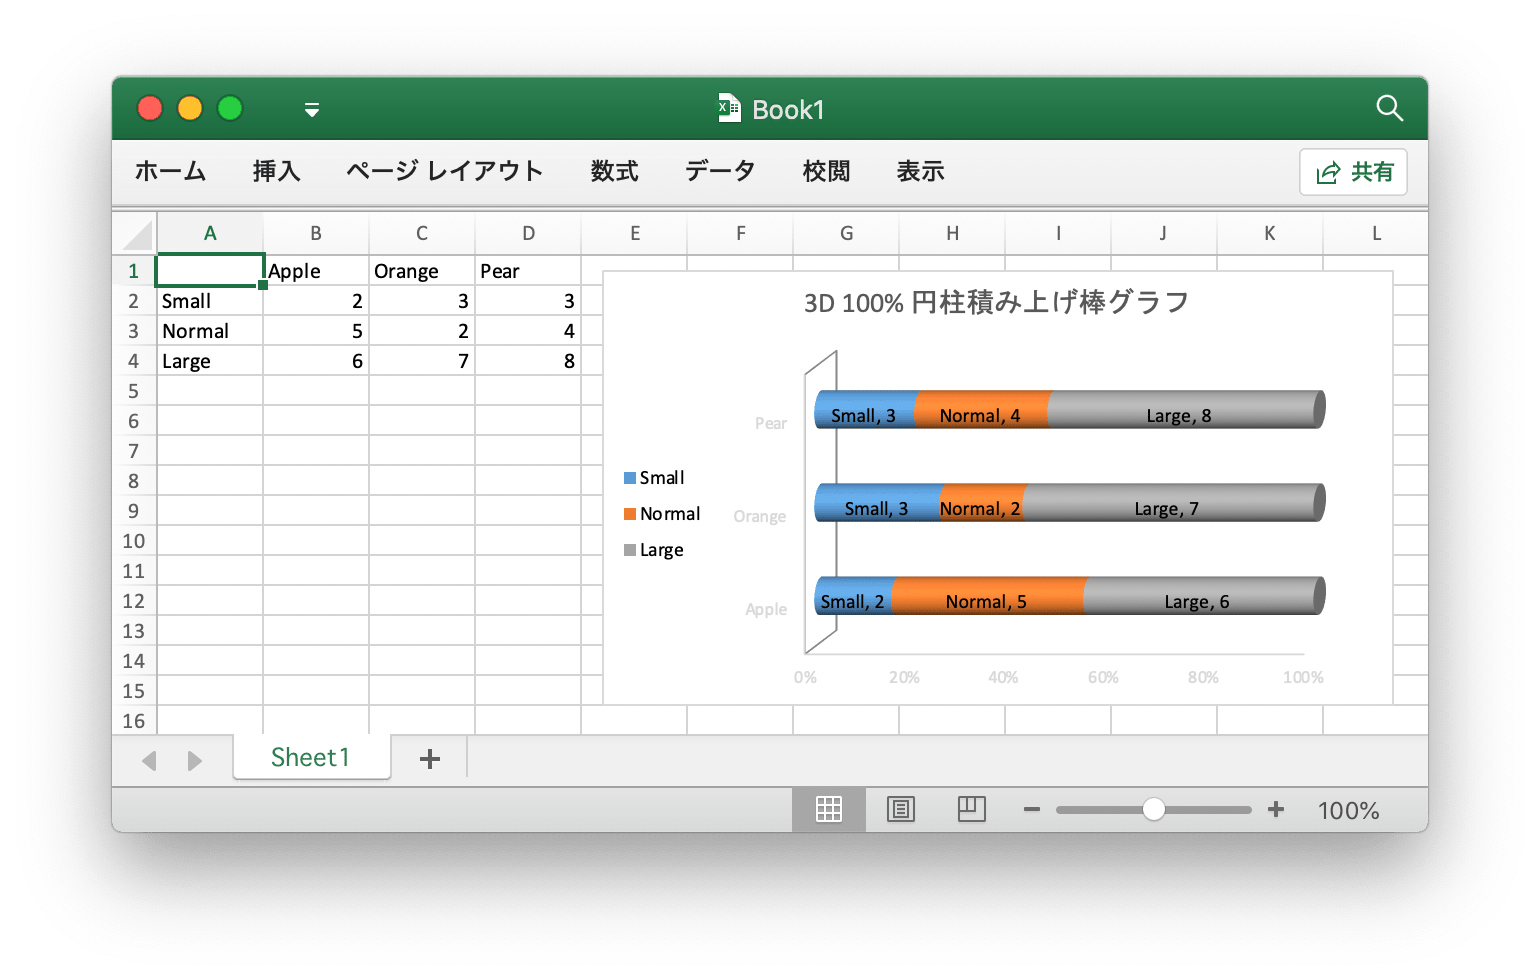 Go 言語を使用して Excel ドキュメントで 3D 100% 円柱積み上げ棒グラフ 作成する